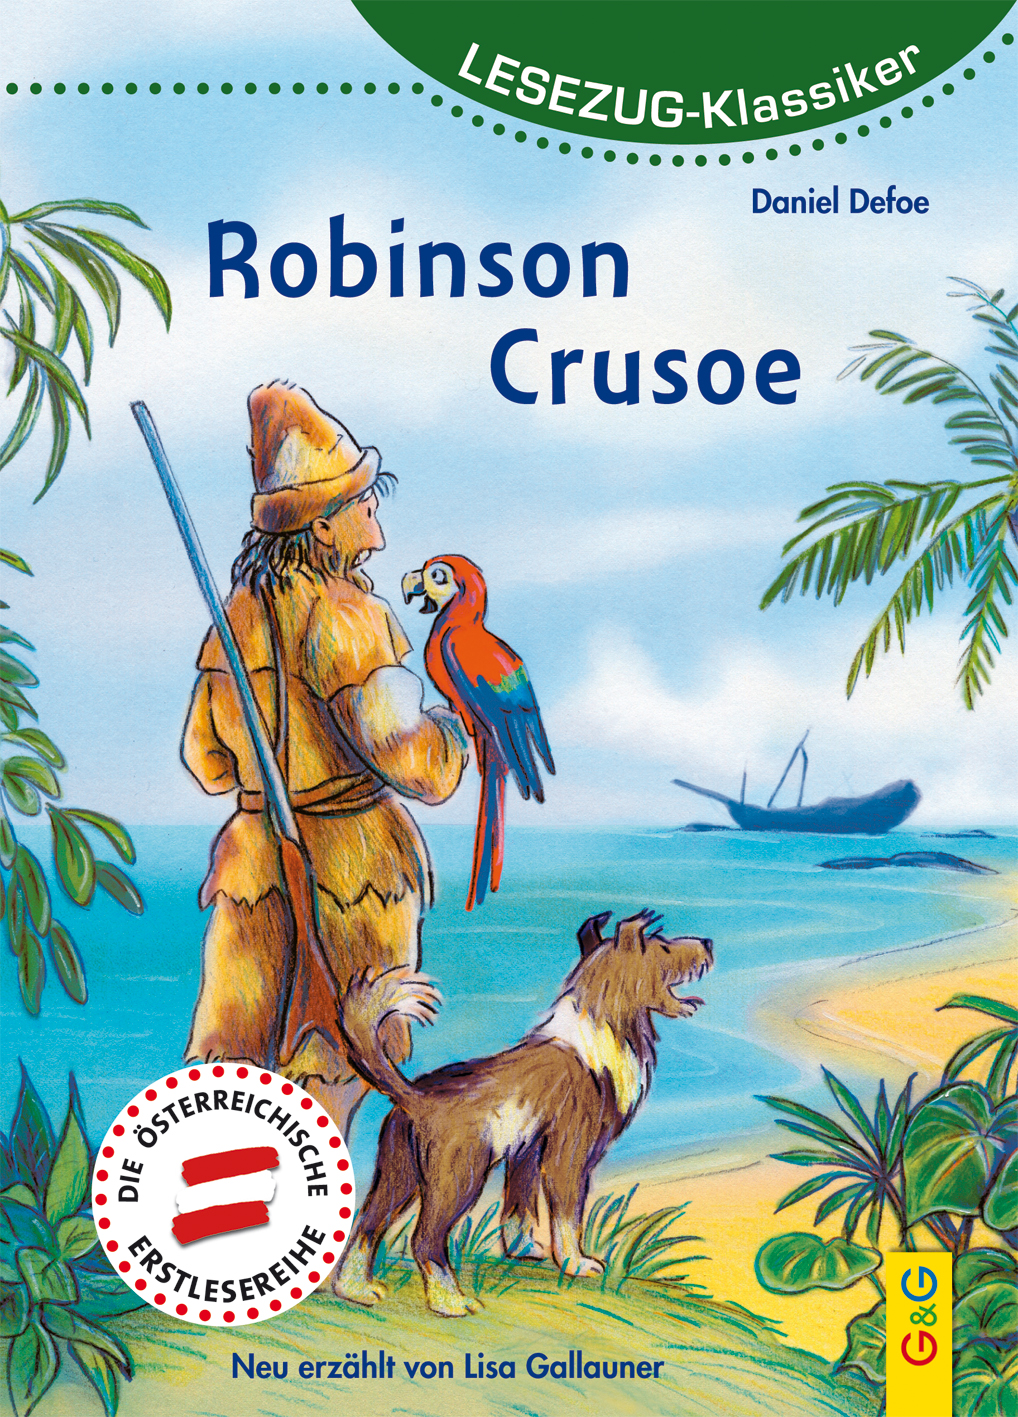 LESEZUG/Klassiker: Robinson Crusoe | Kinderbuch G&G